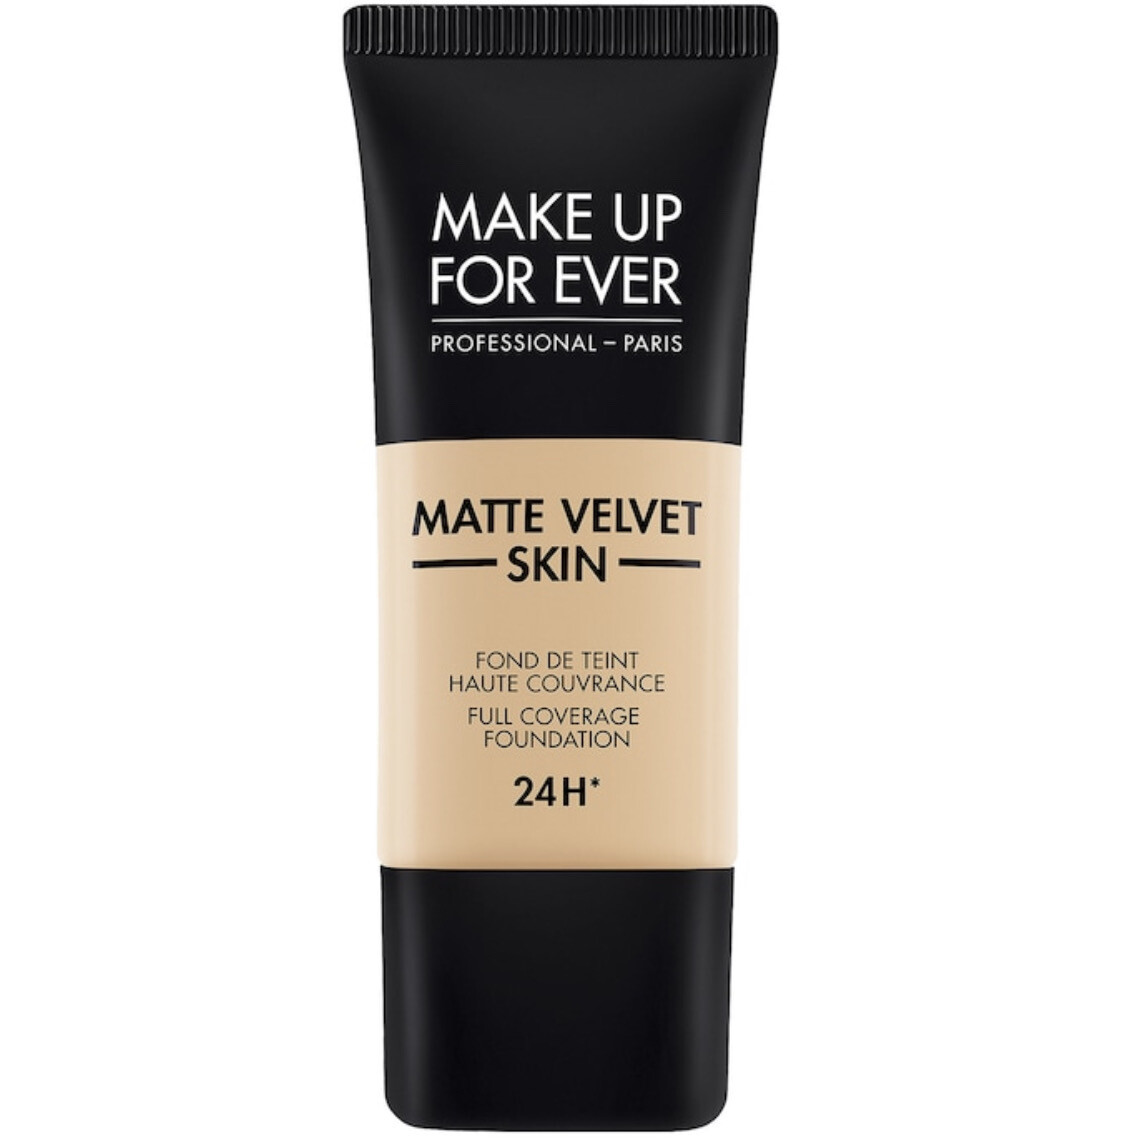 Make Up For Ever - Matte Velvet Skin Full Coverage Foundation | Y235 Ivory Beige - for light skin with neutral undertones